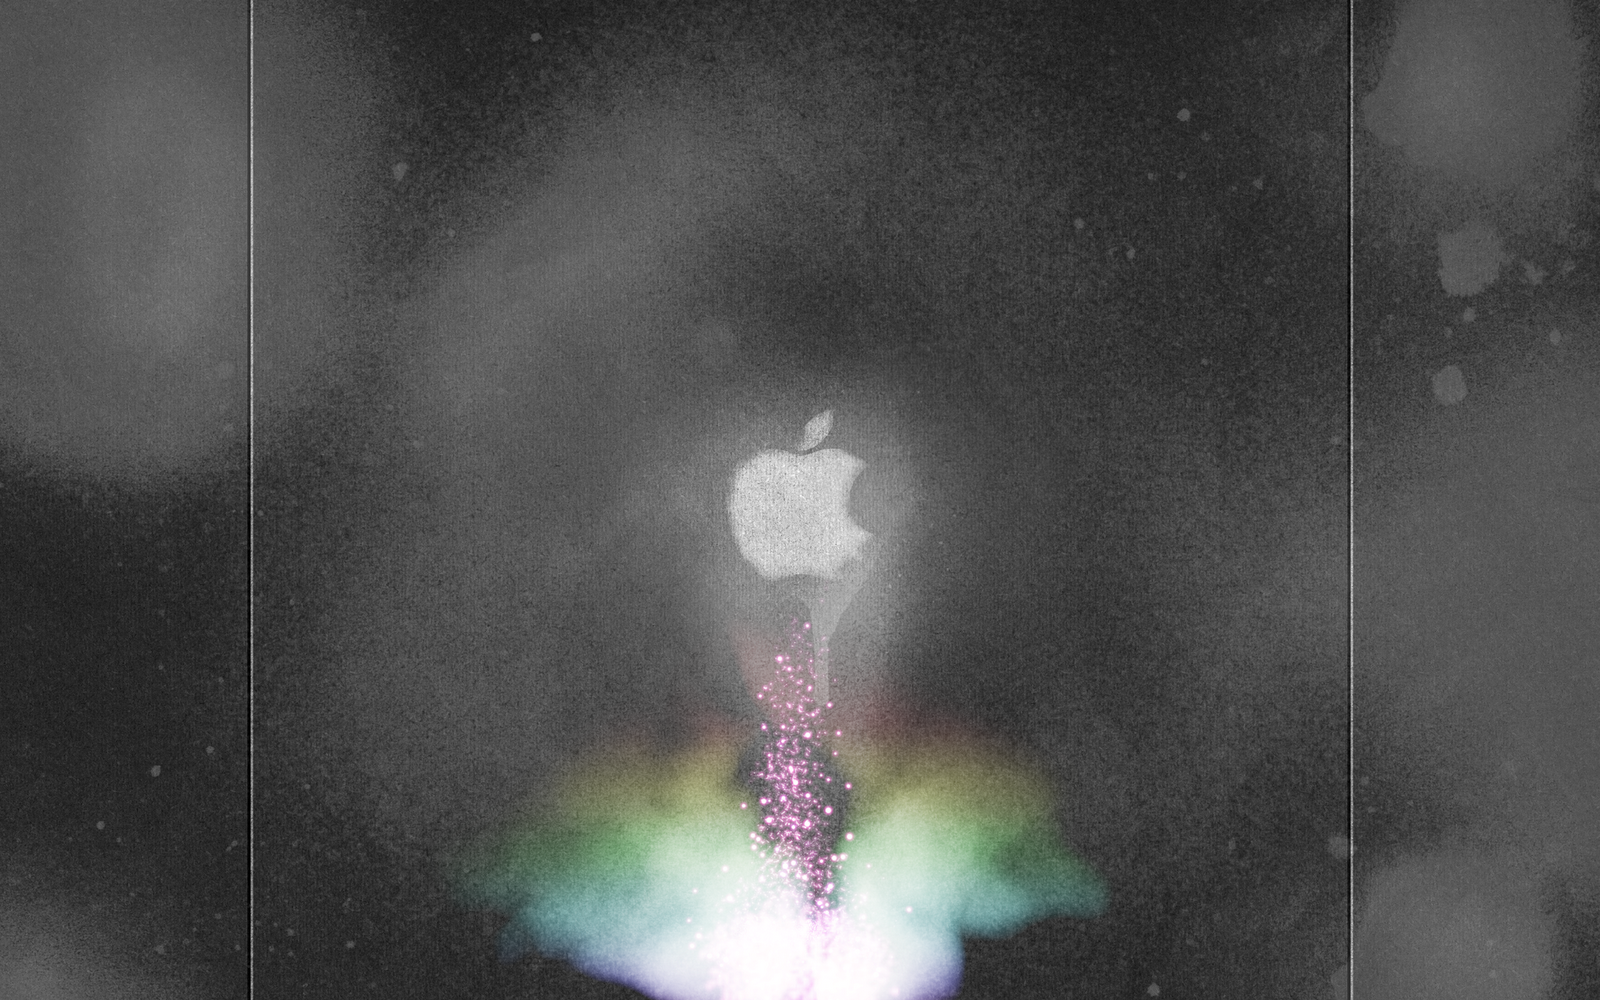 magical apple logo wallpaper